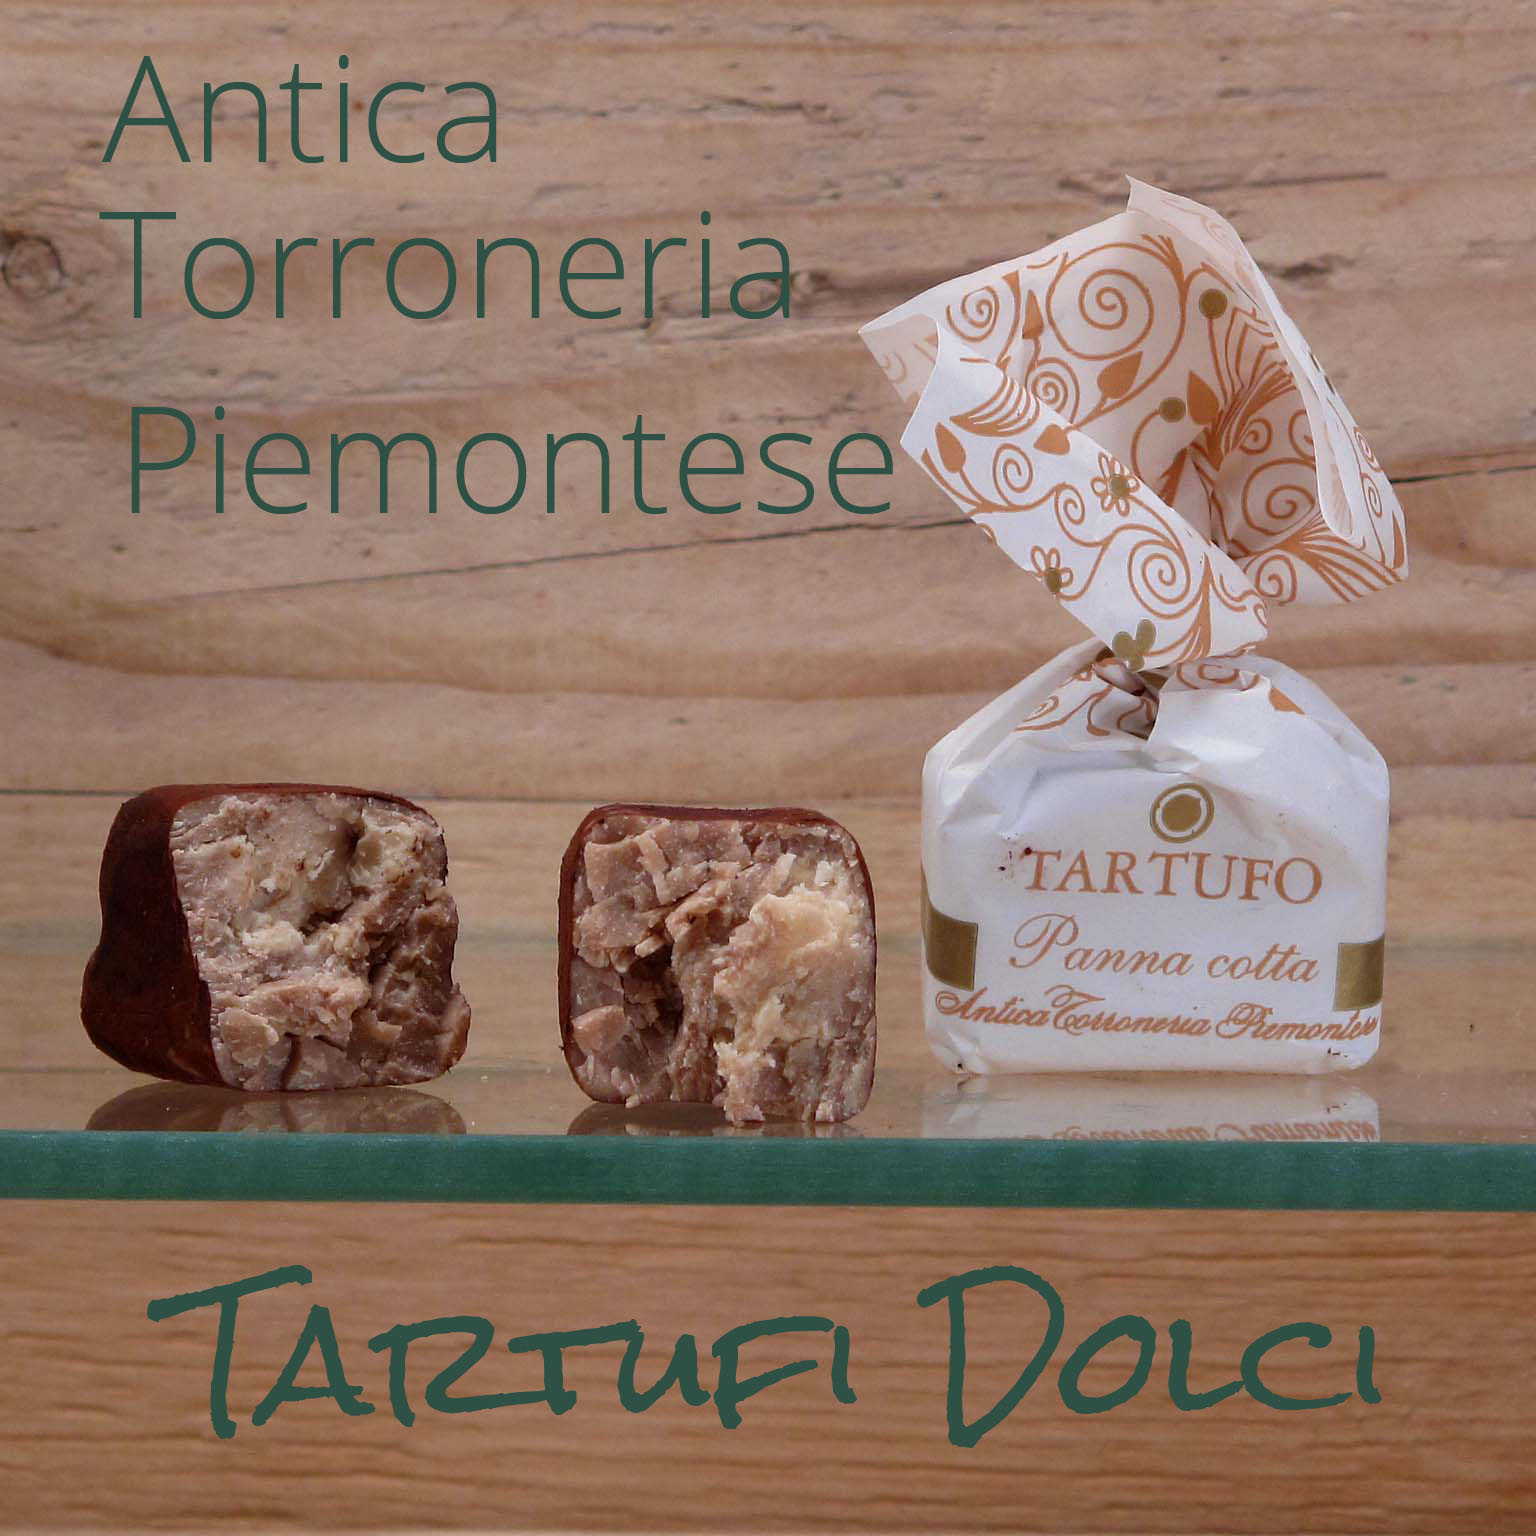 Antica-Torroneria-Piemontese-Starter